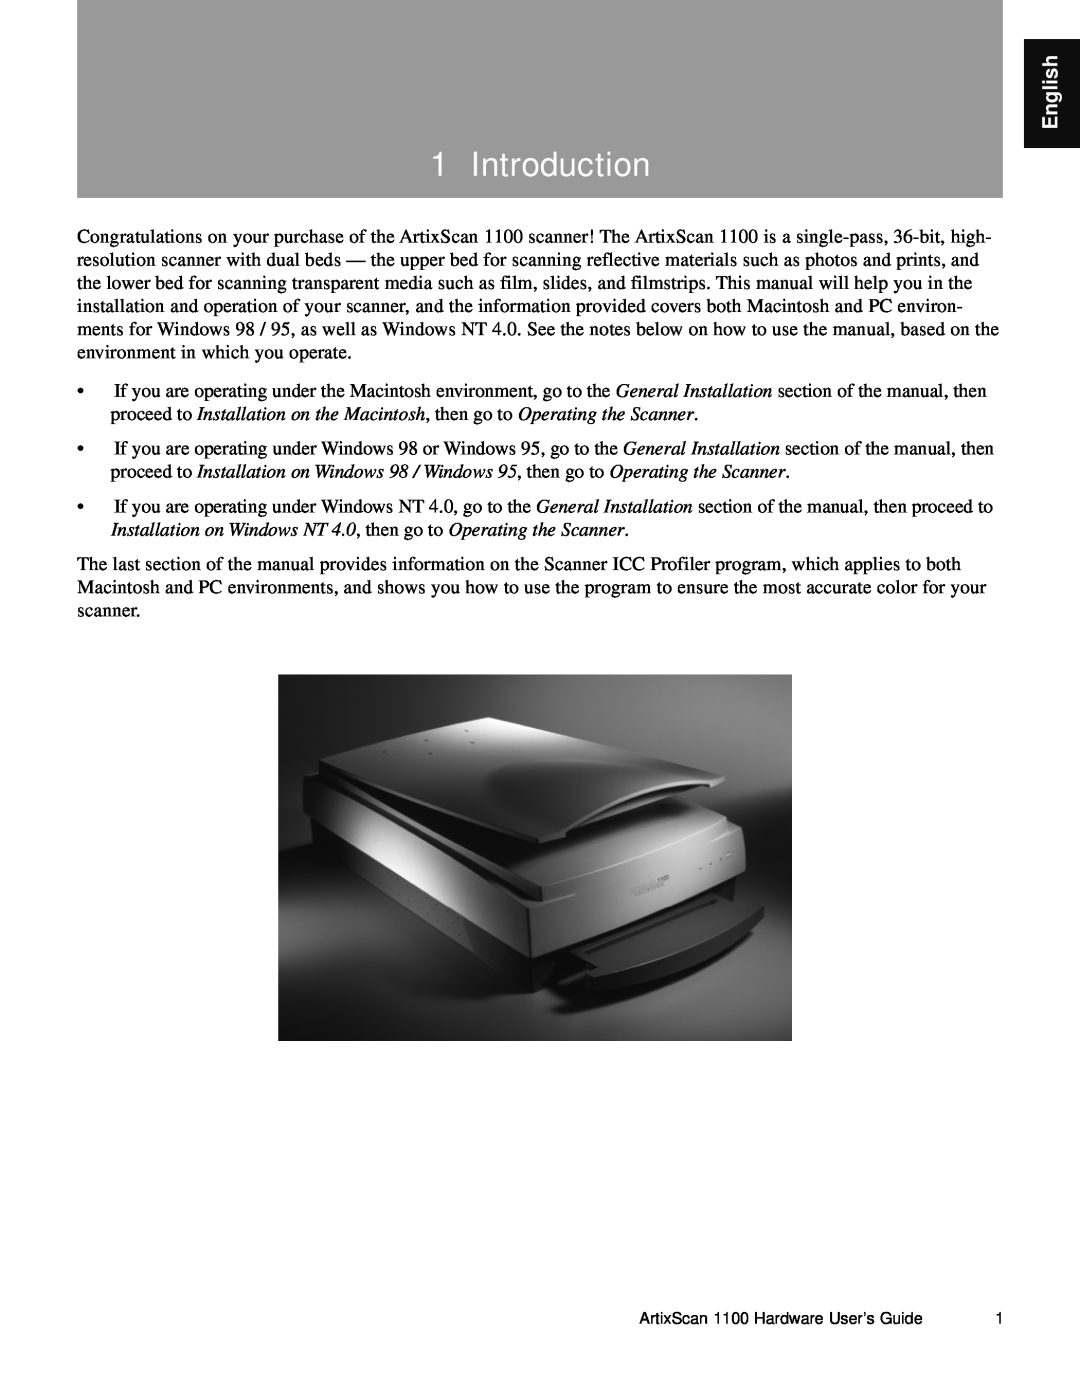 Microtek Artix Scan1100 manual Introduction, English, ArtixScan 1100 Hardware User’s Guide 